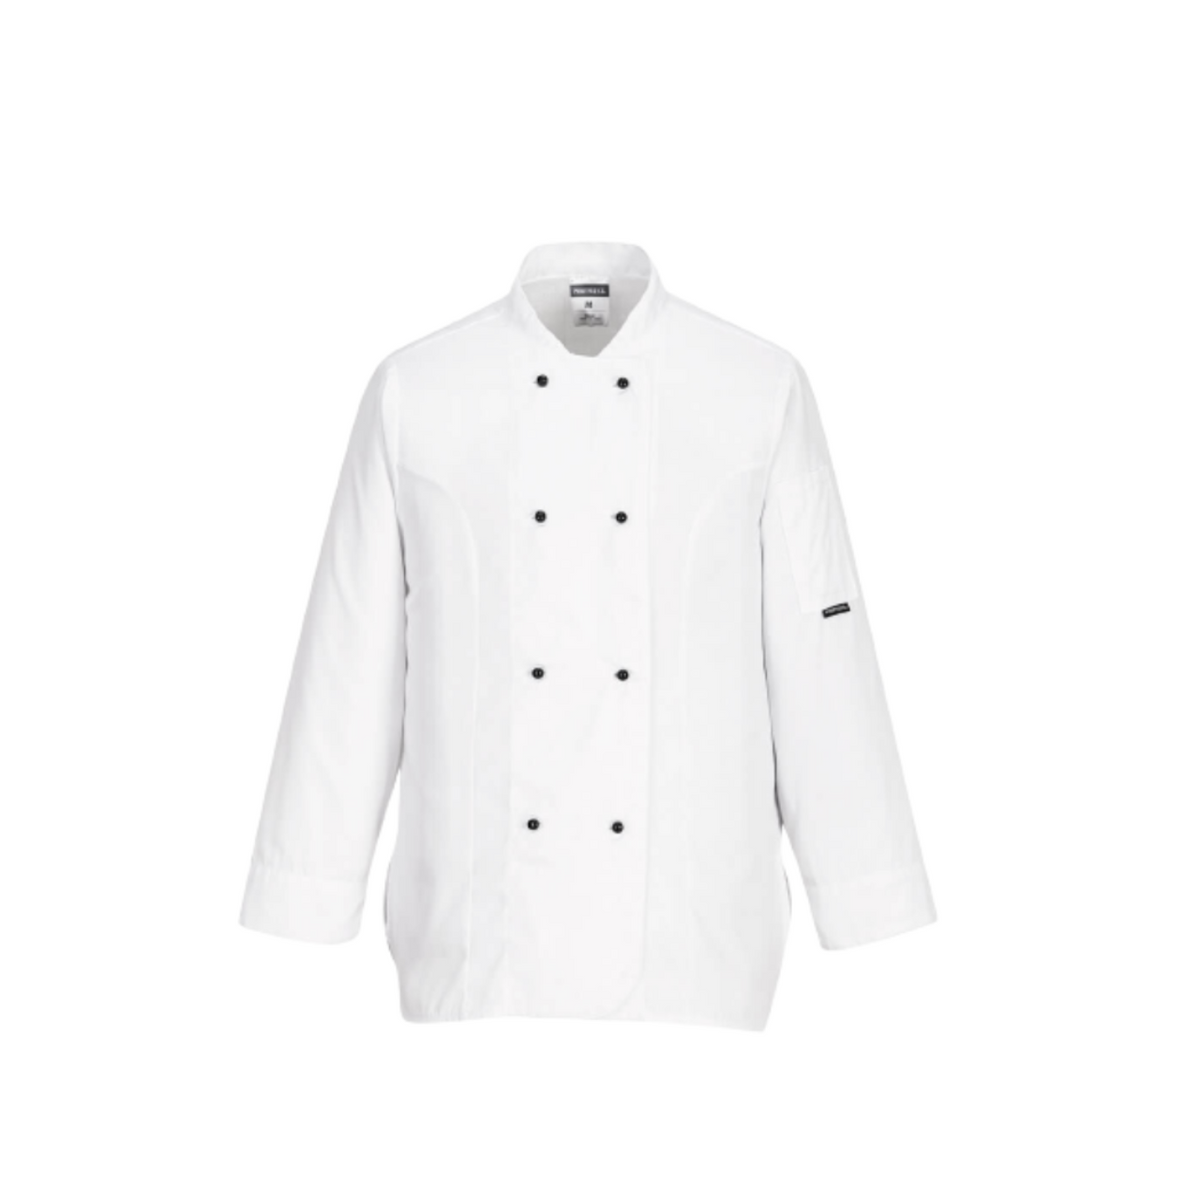 Portwest Rachel Ladies Chefs Jacket L/S White Mesh Air Long Sleeve Pocket C837-Collins Clothing Co